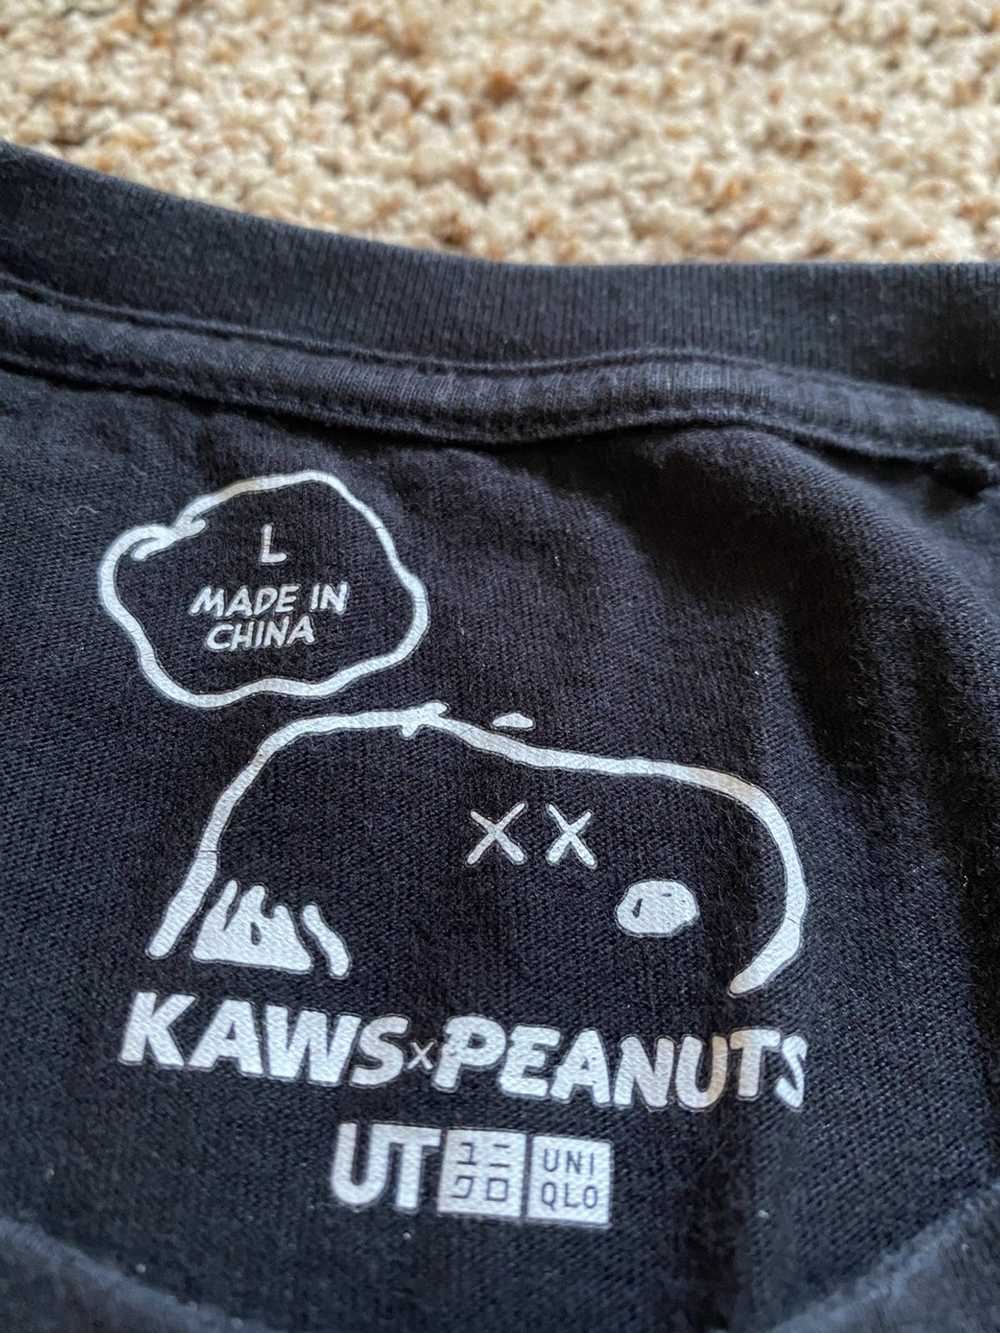 Uniqlo Kaws X Peanuts X Uniqlo Snoopy T-Shirt - image 4